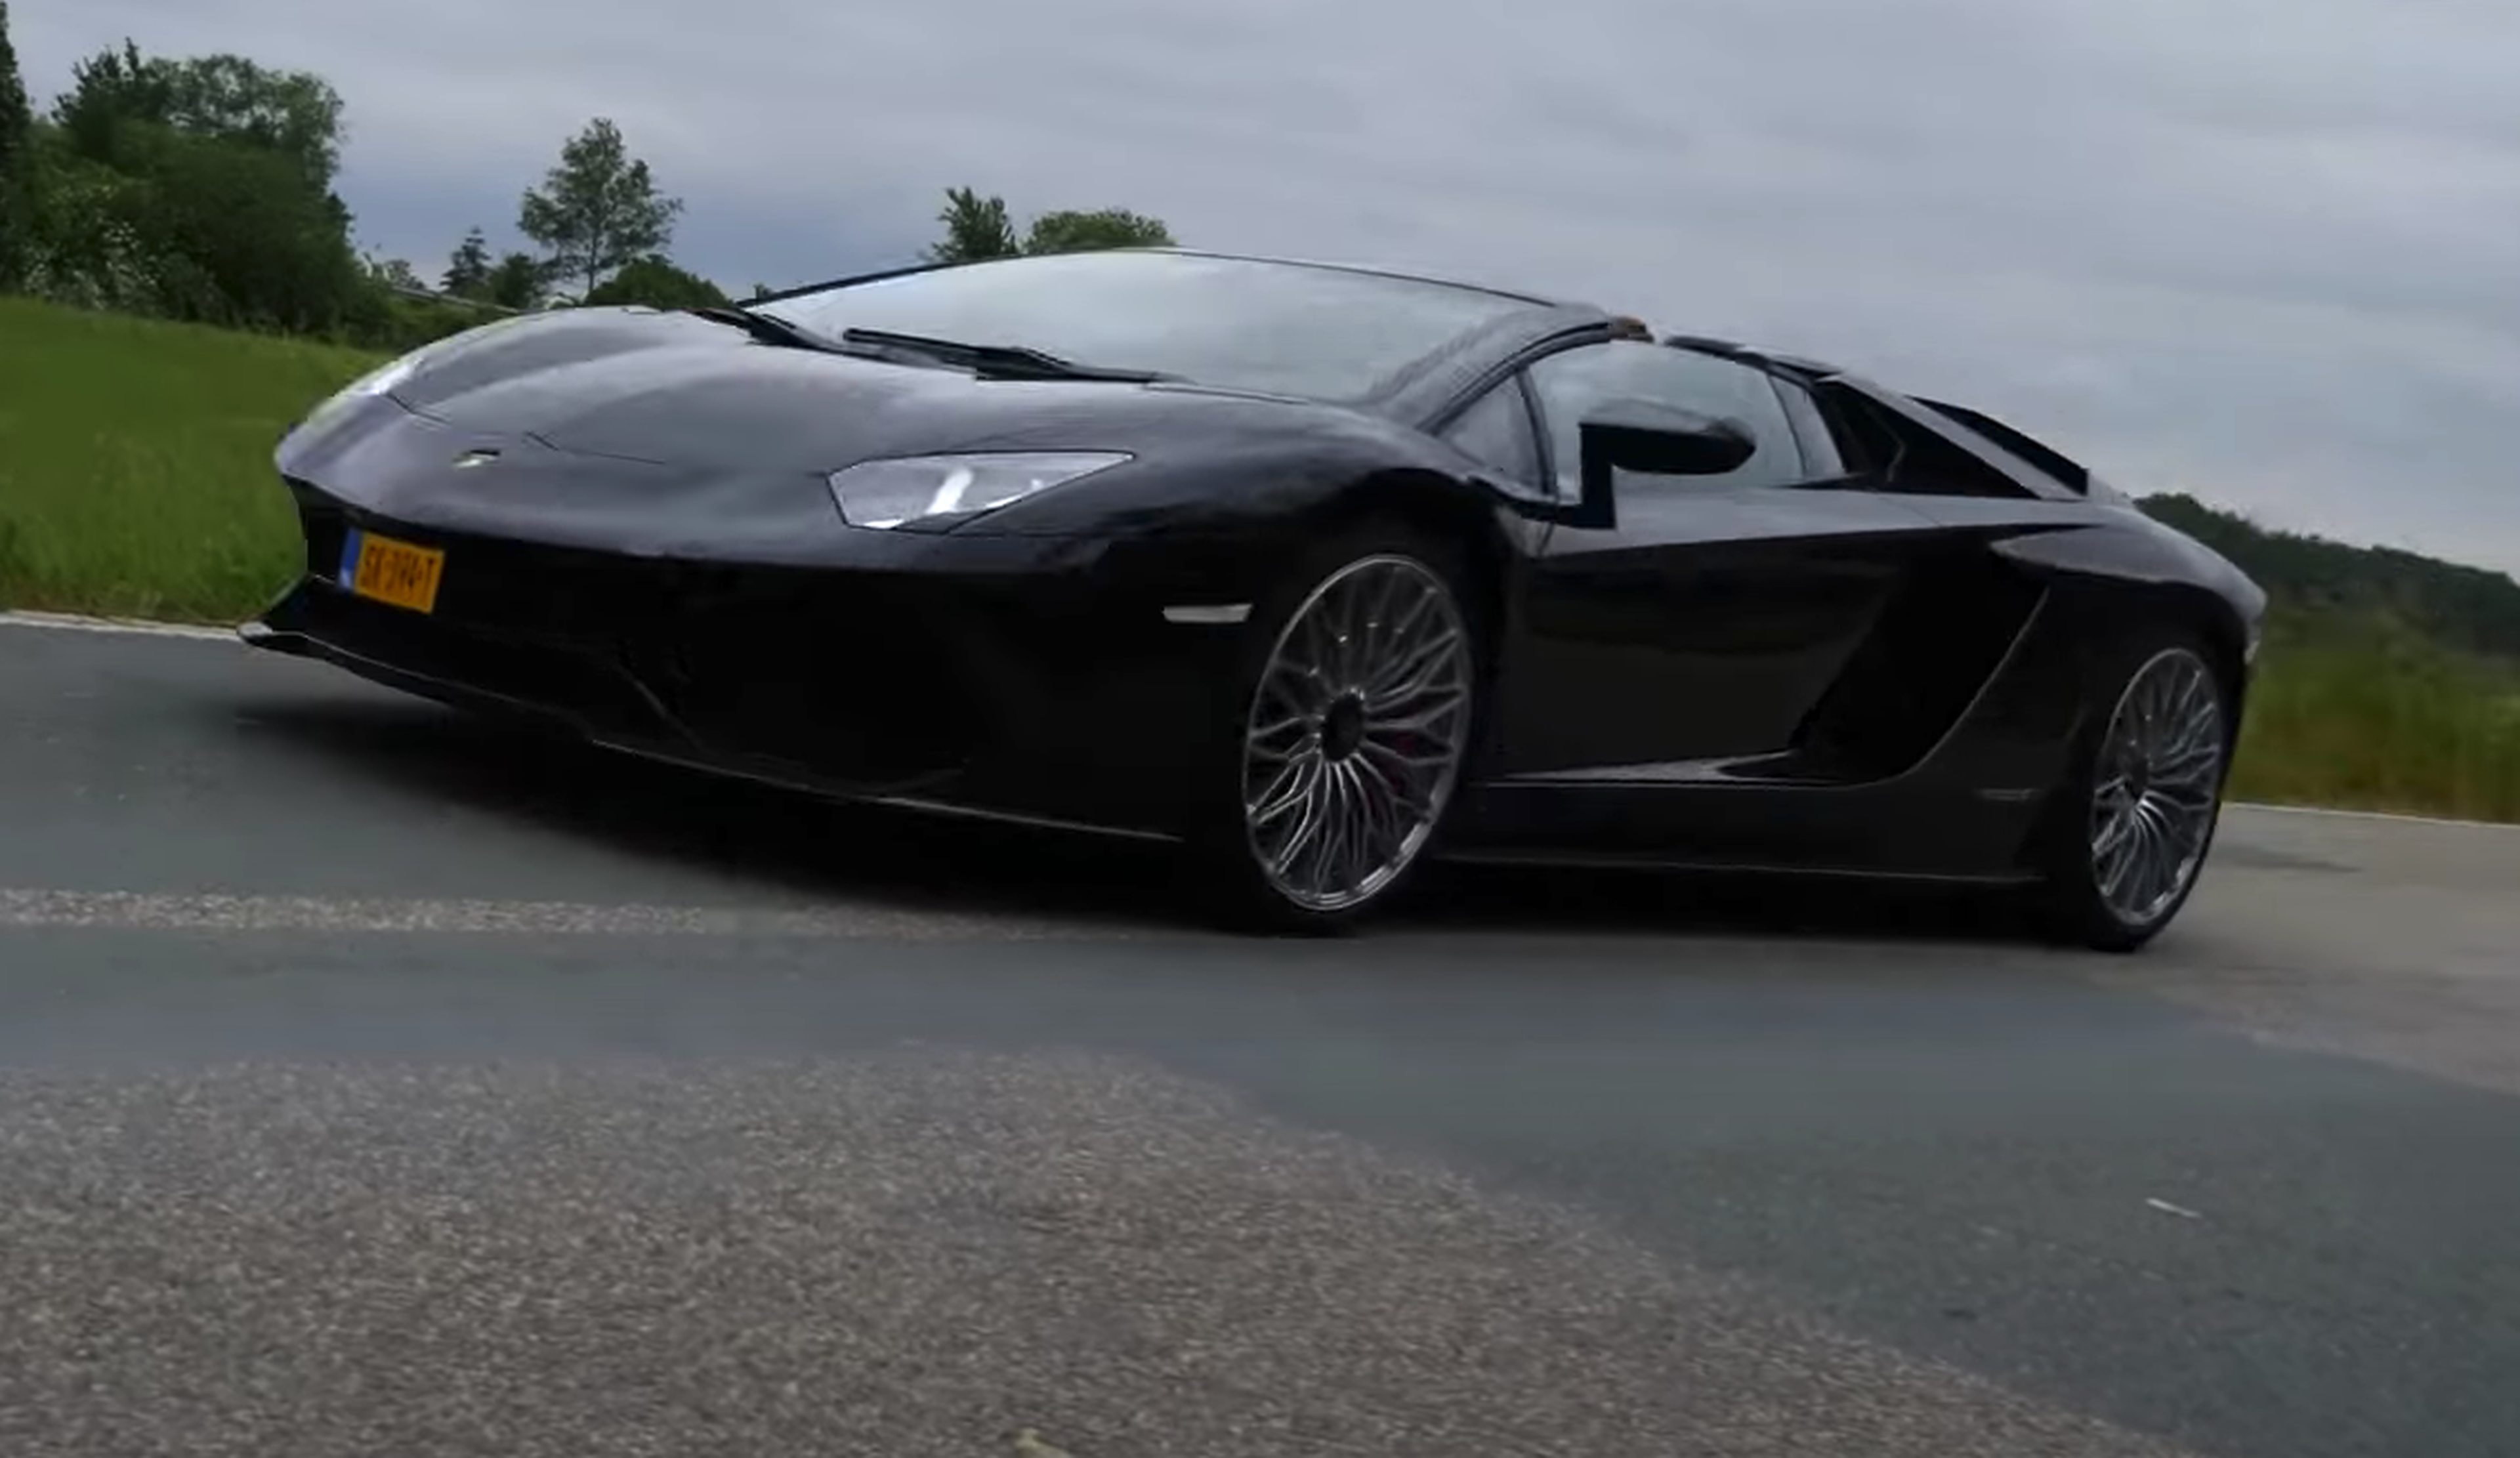 Lamborghini Aventador a más de 300 km/h en autopista